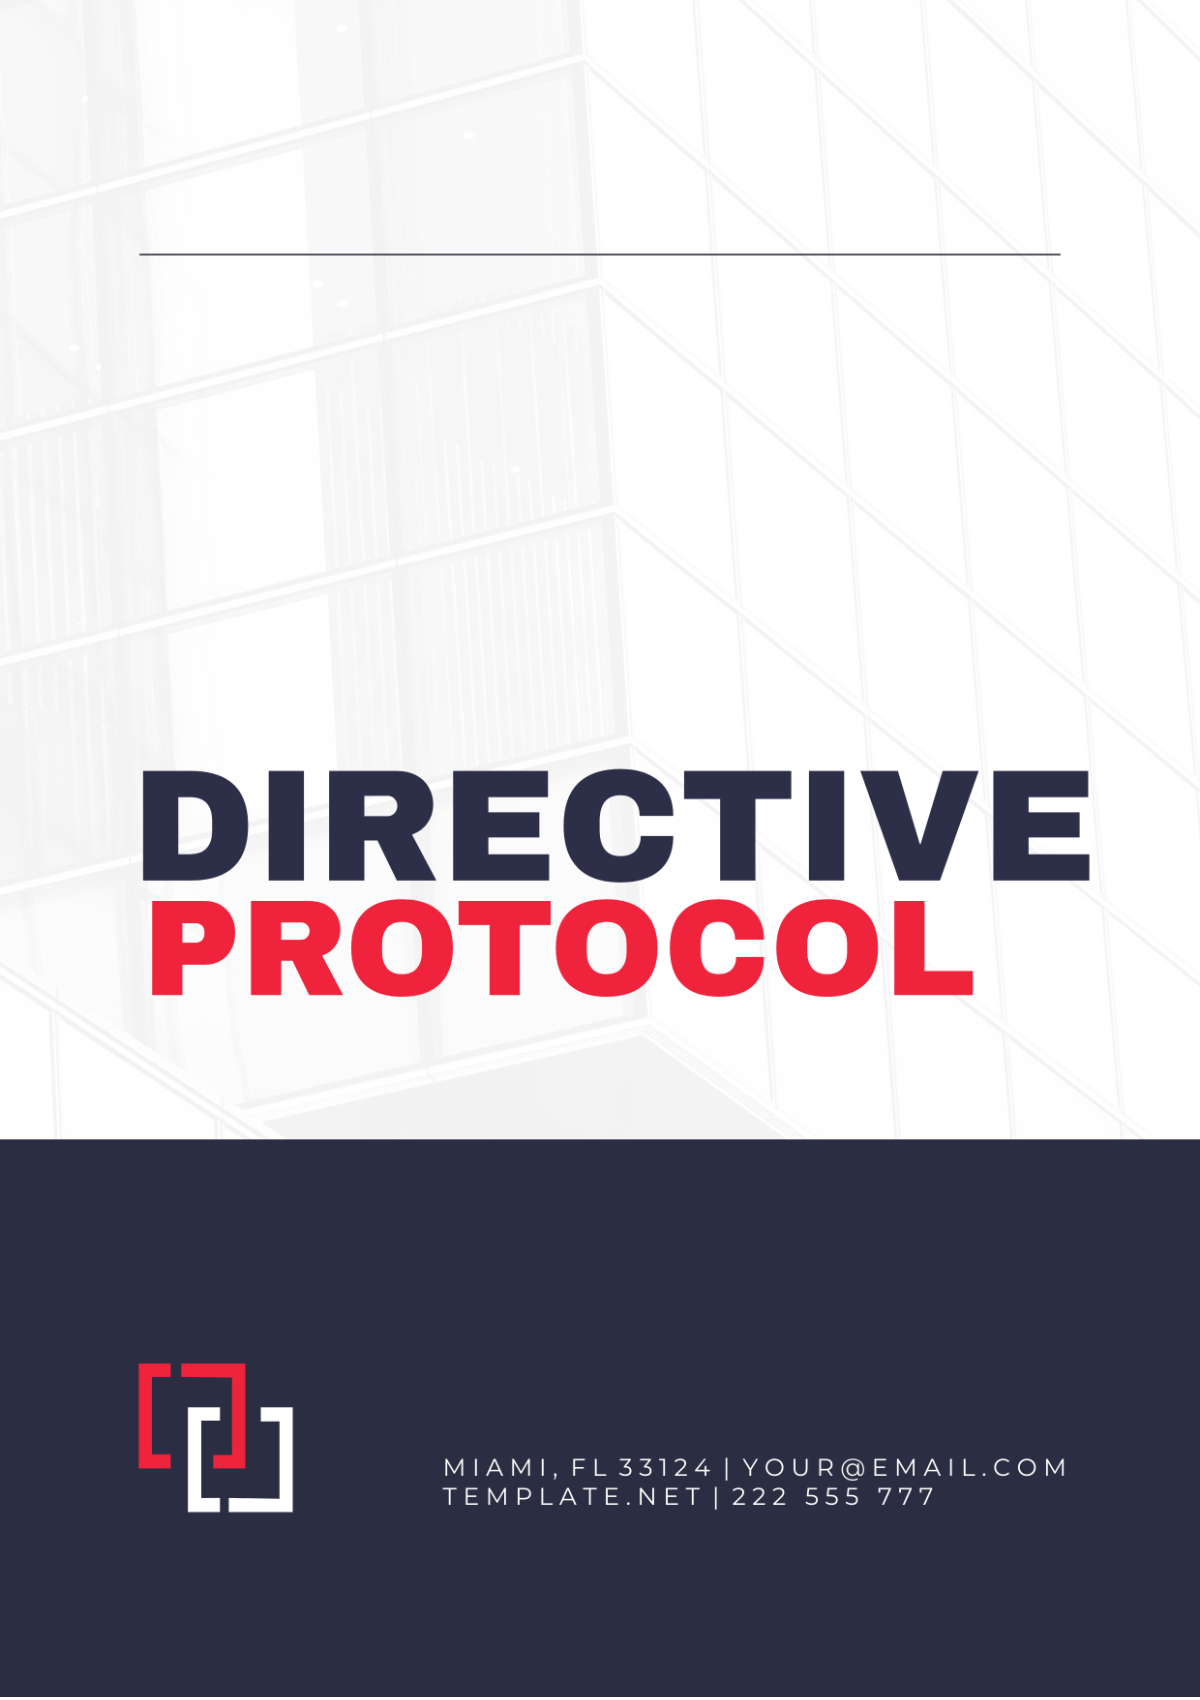 Directive Protocol Template